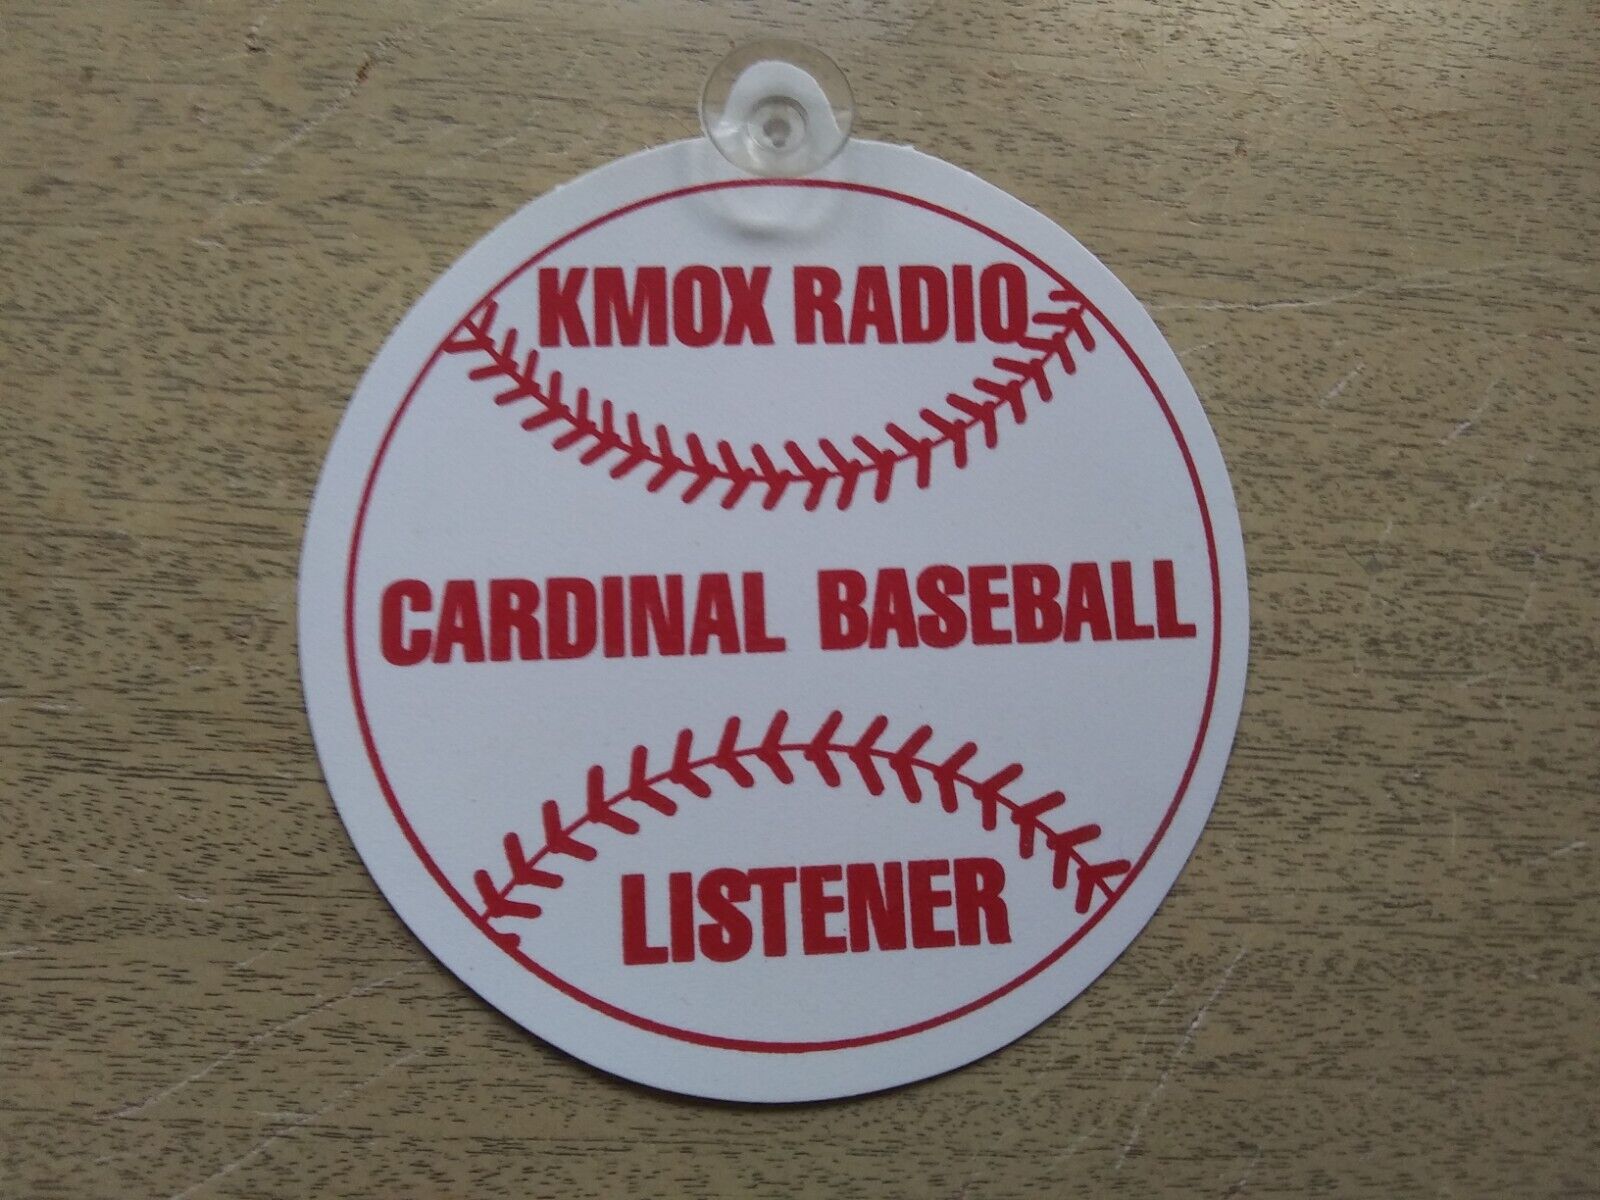 Older kmox radio st. Louis cardinal baseball window promo 1120 am